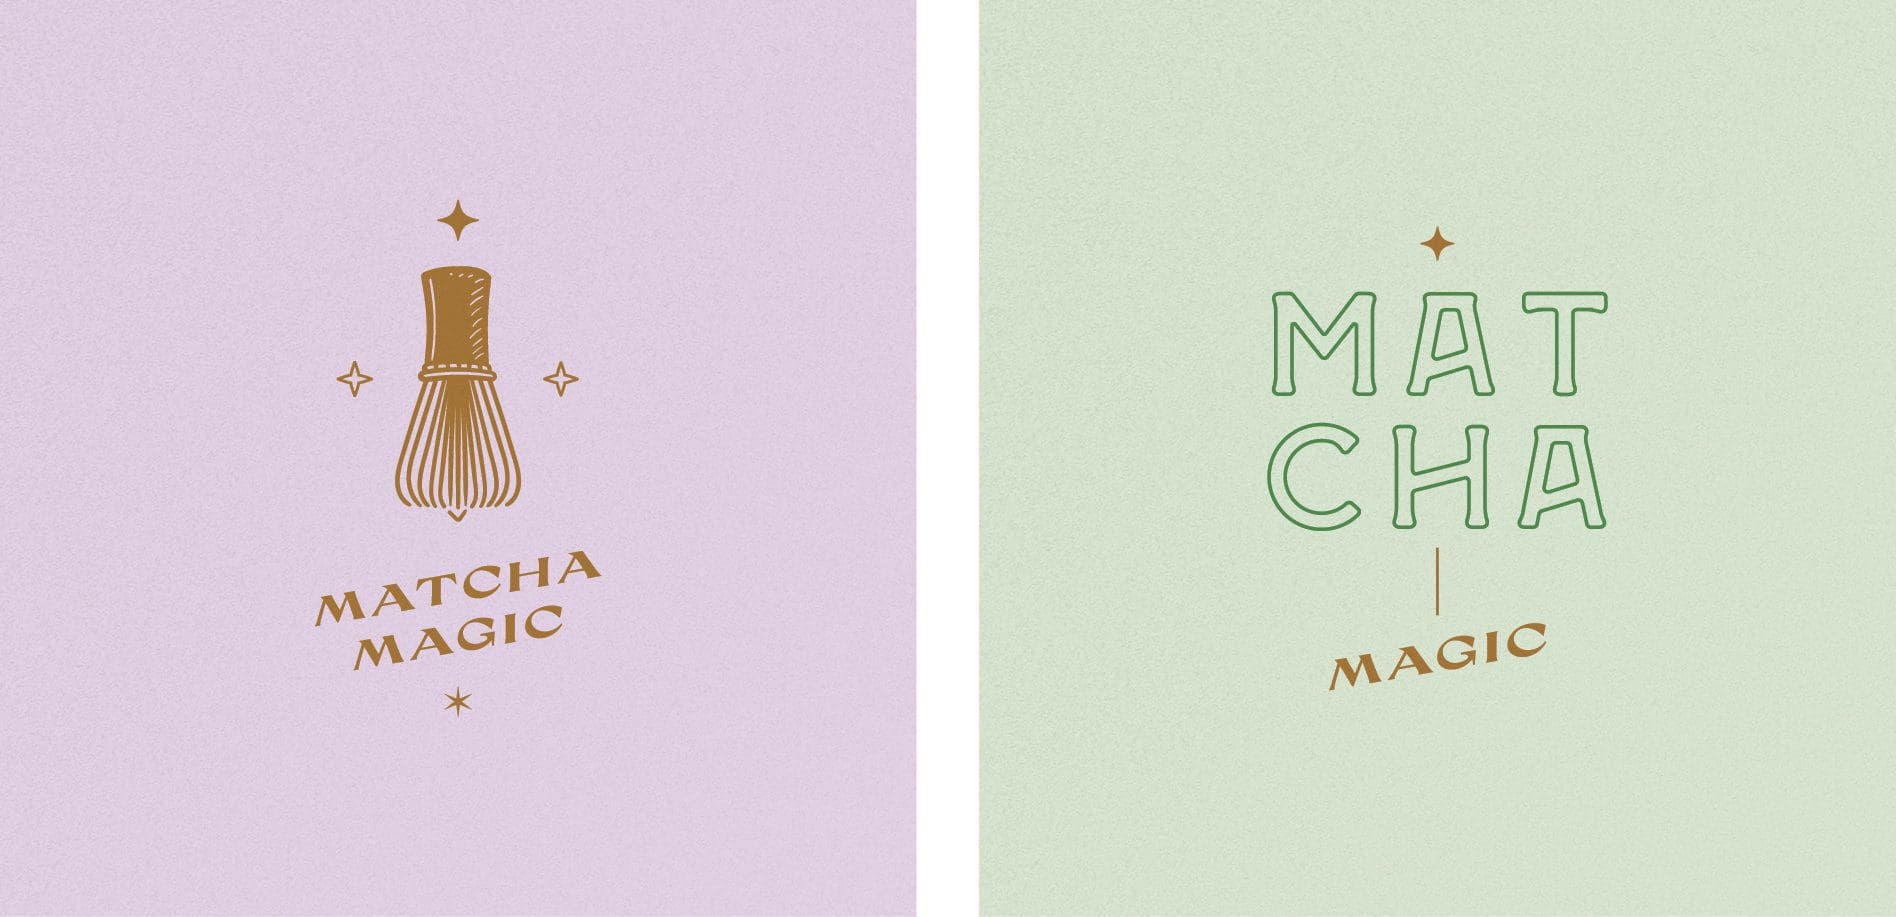 Matcha Magic Cafe - Branding Logos for Restaurants